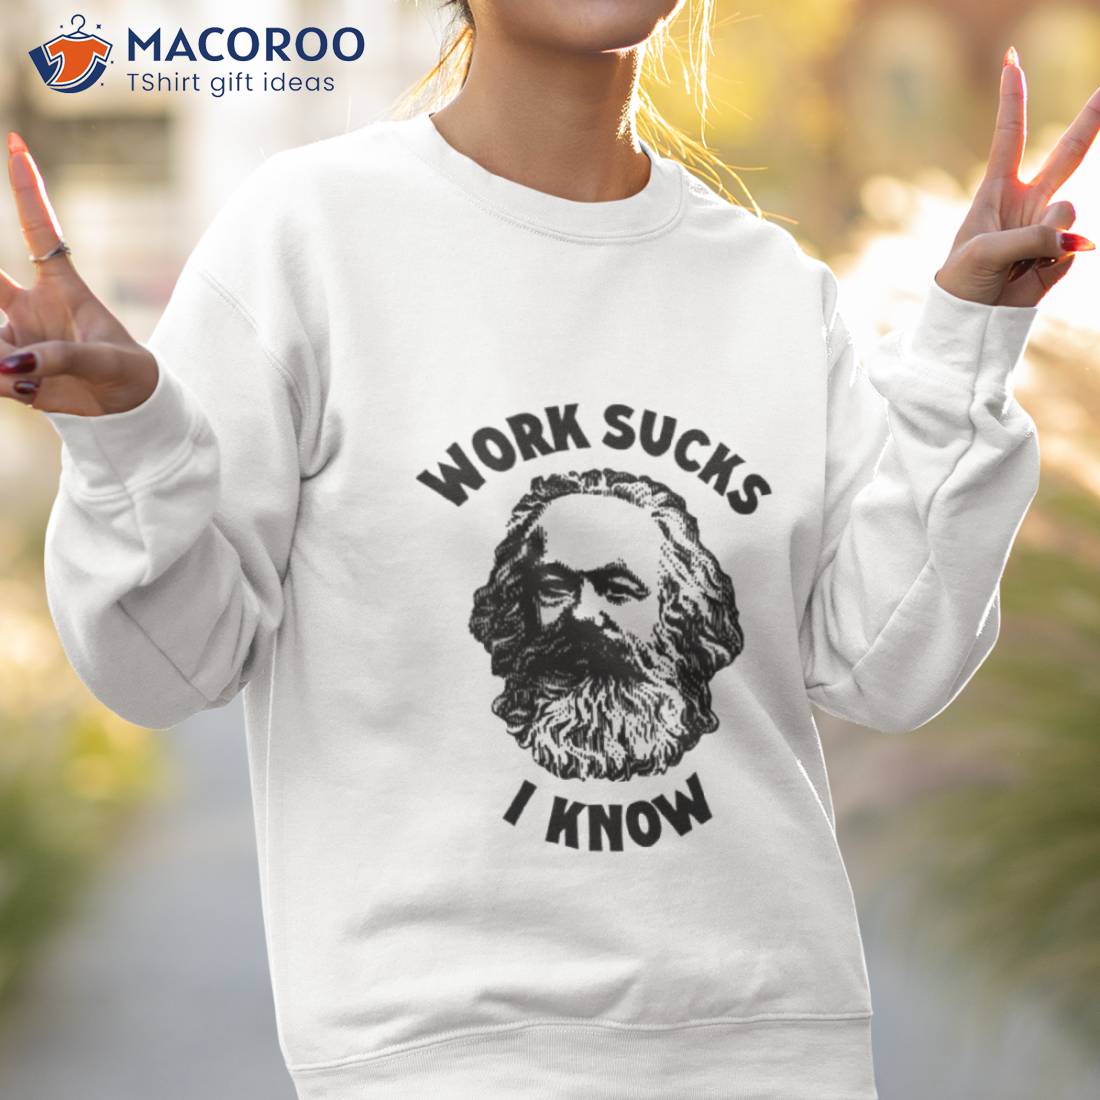 https://images.macoroo.com/wp-content/uploads/2023/06/work-sucks-i-know-shirt-sweatshirt-2.jpg